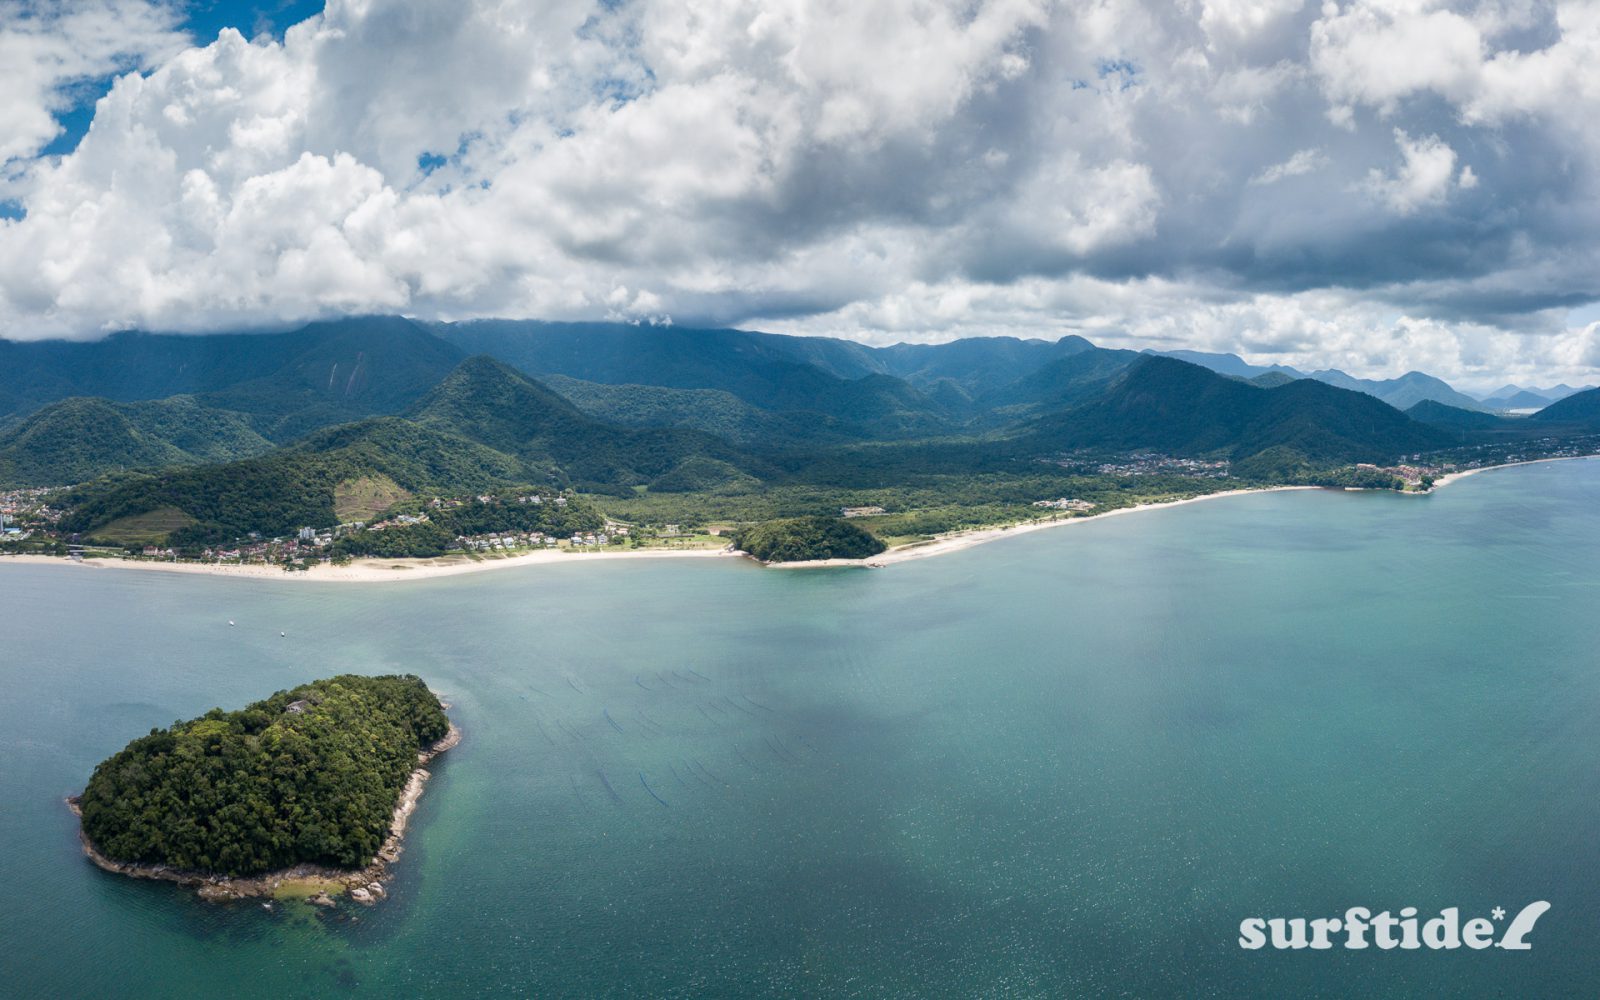 Aerial photo showing Ilha da Cocanha and the beaches of Cocanha, Mococa and Tabatinga in Brazil